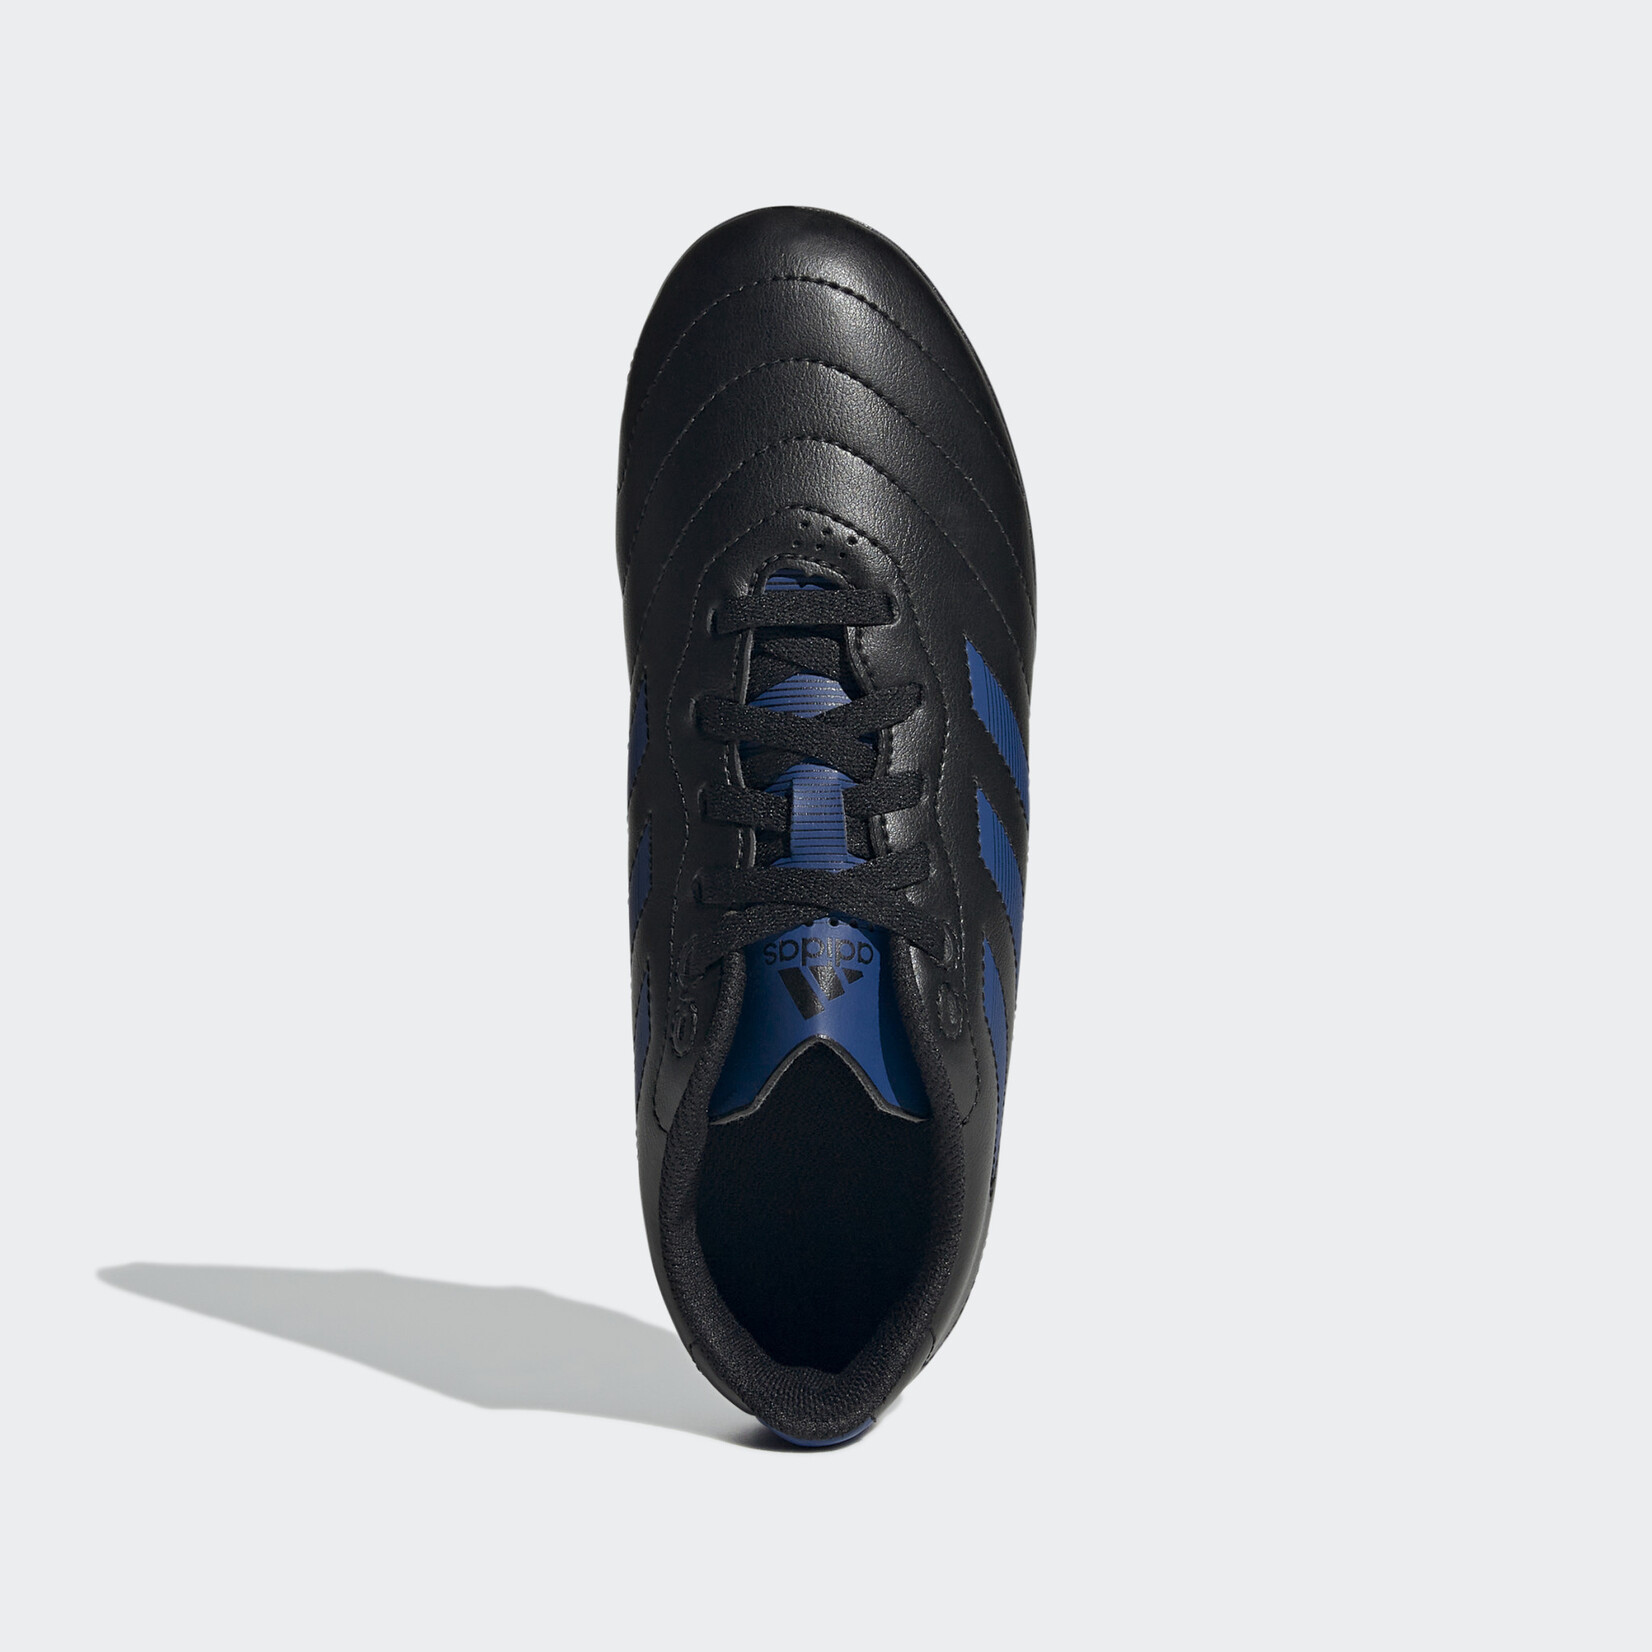 Adidas Goletto VIII FG JR Black/Blue GX6906